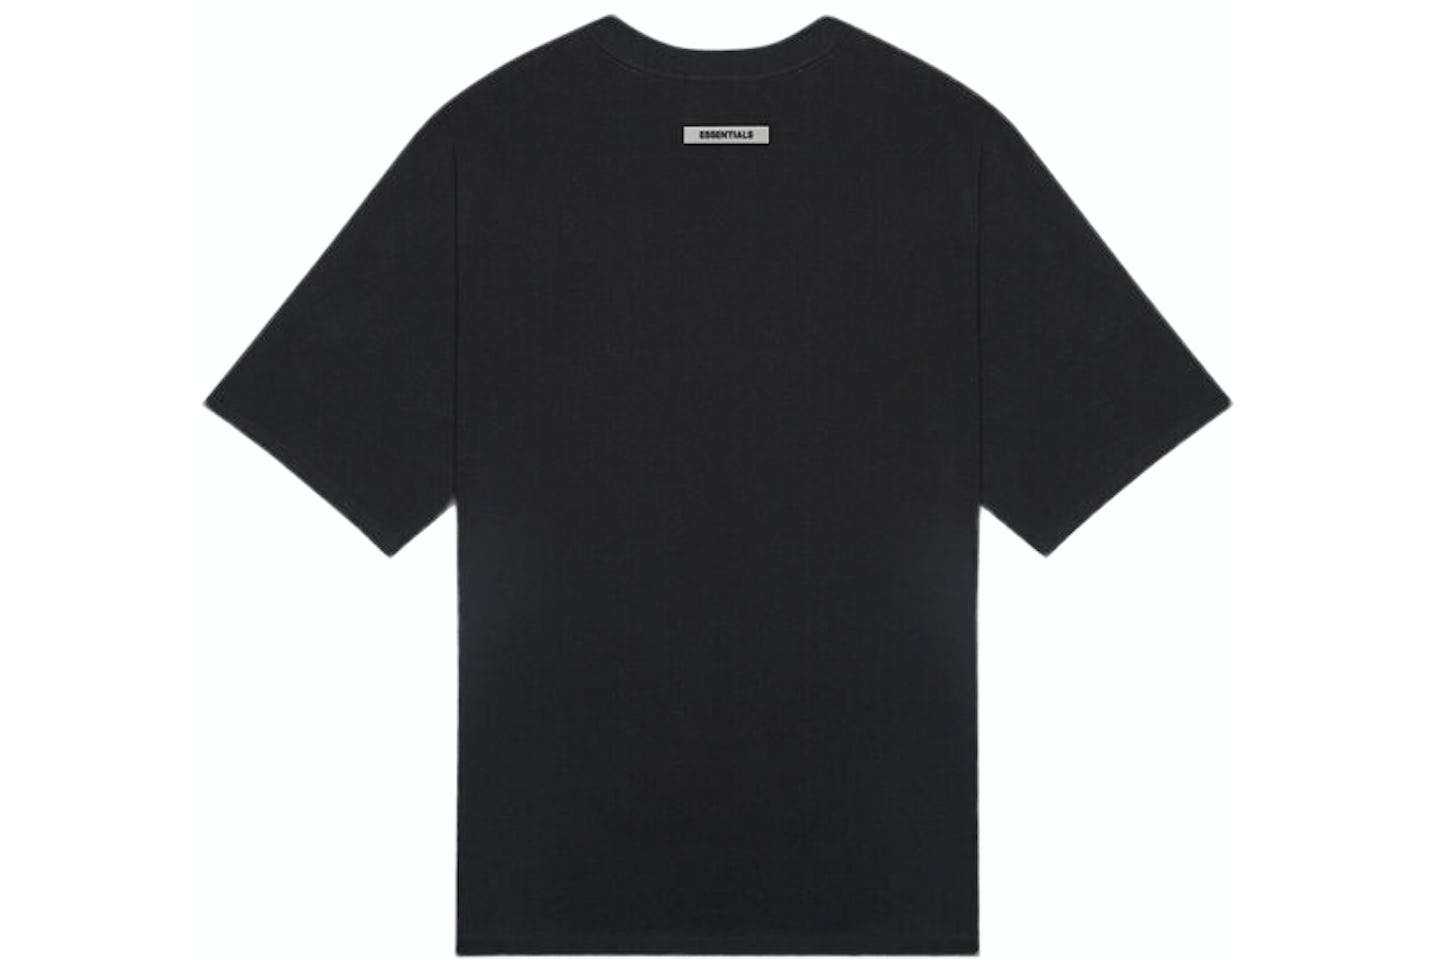 Fear of God Essentials Boxy T-Shirt Applique Logo